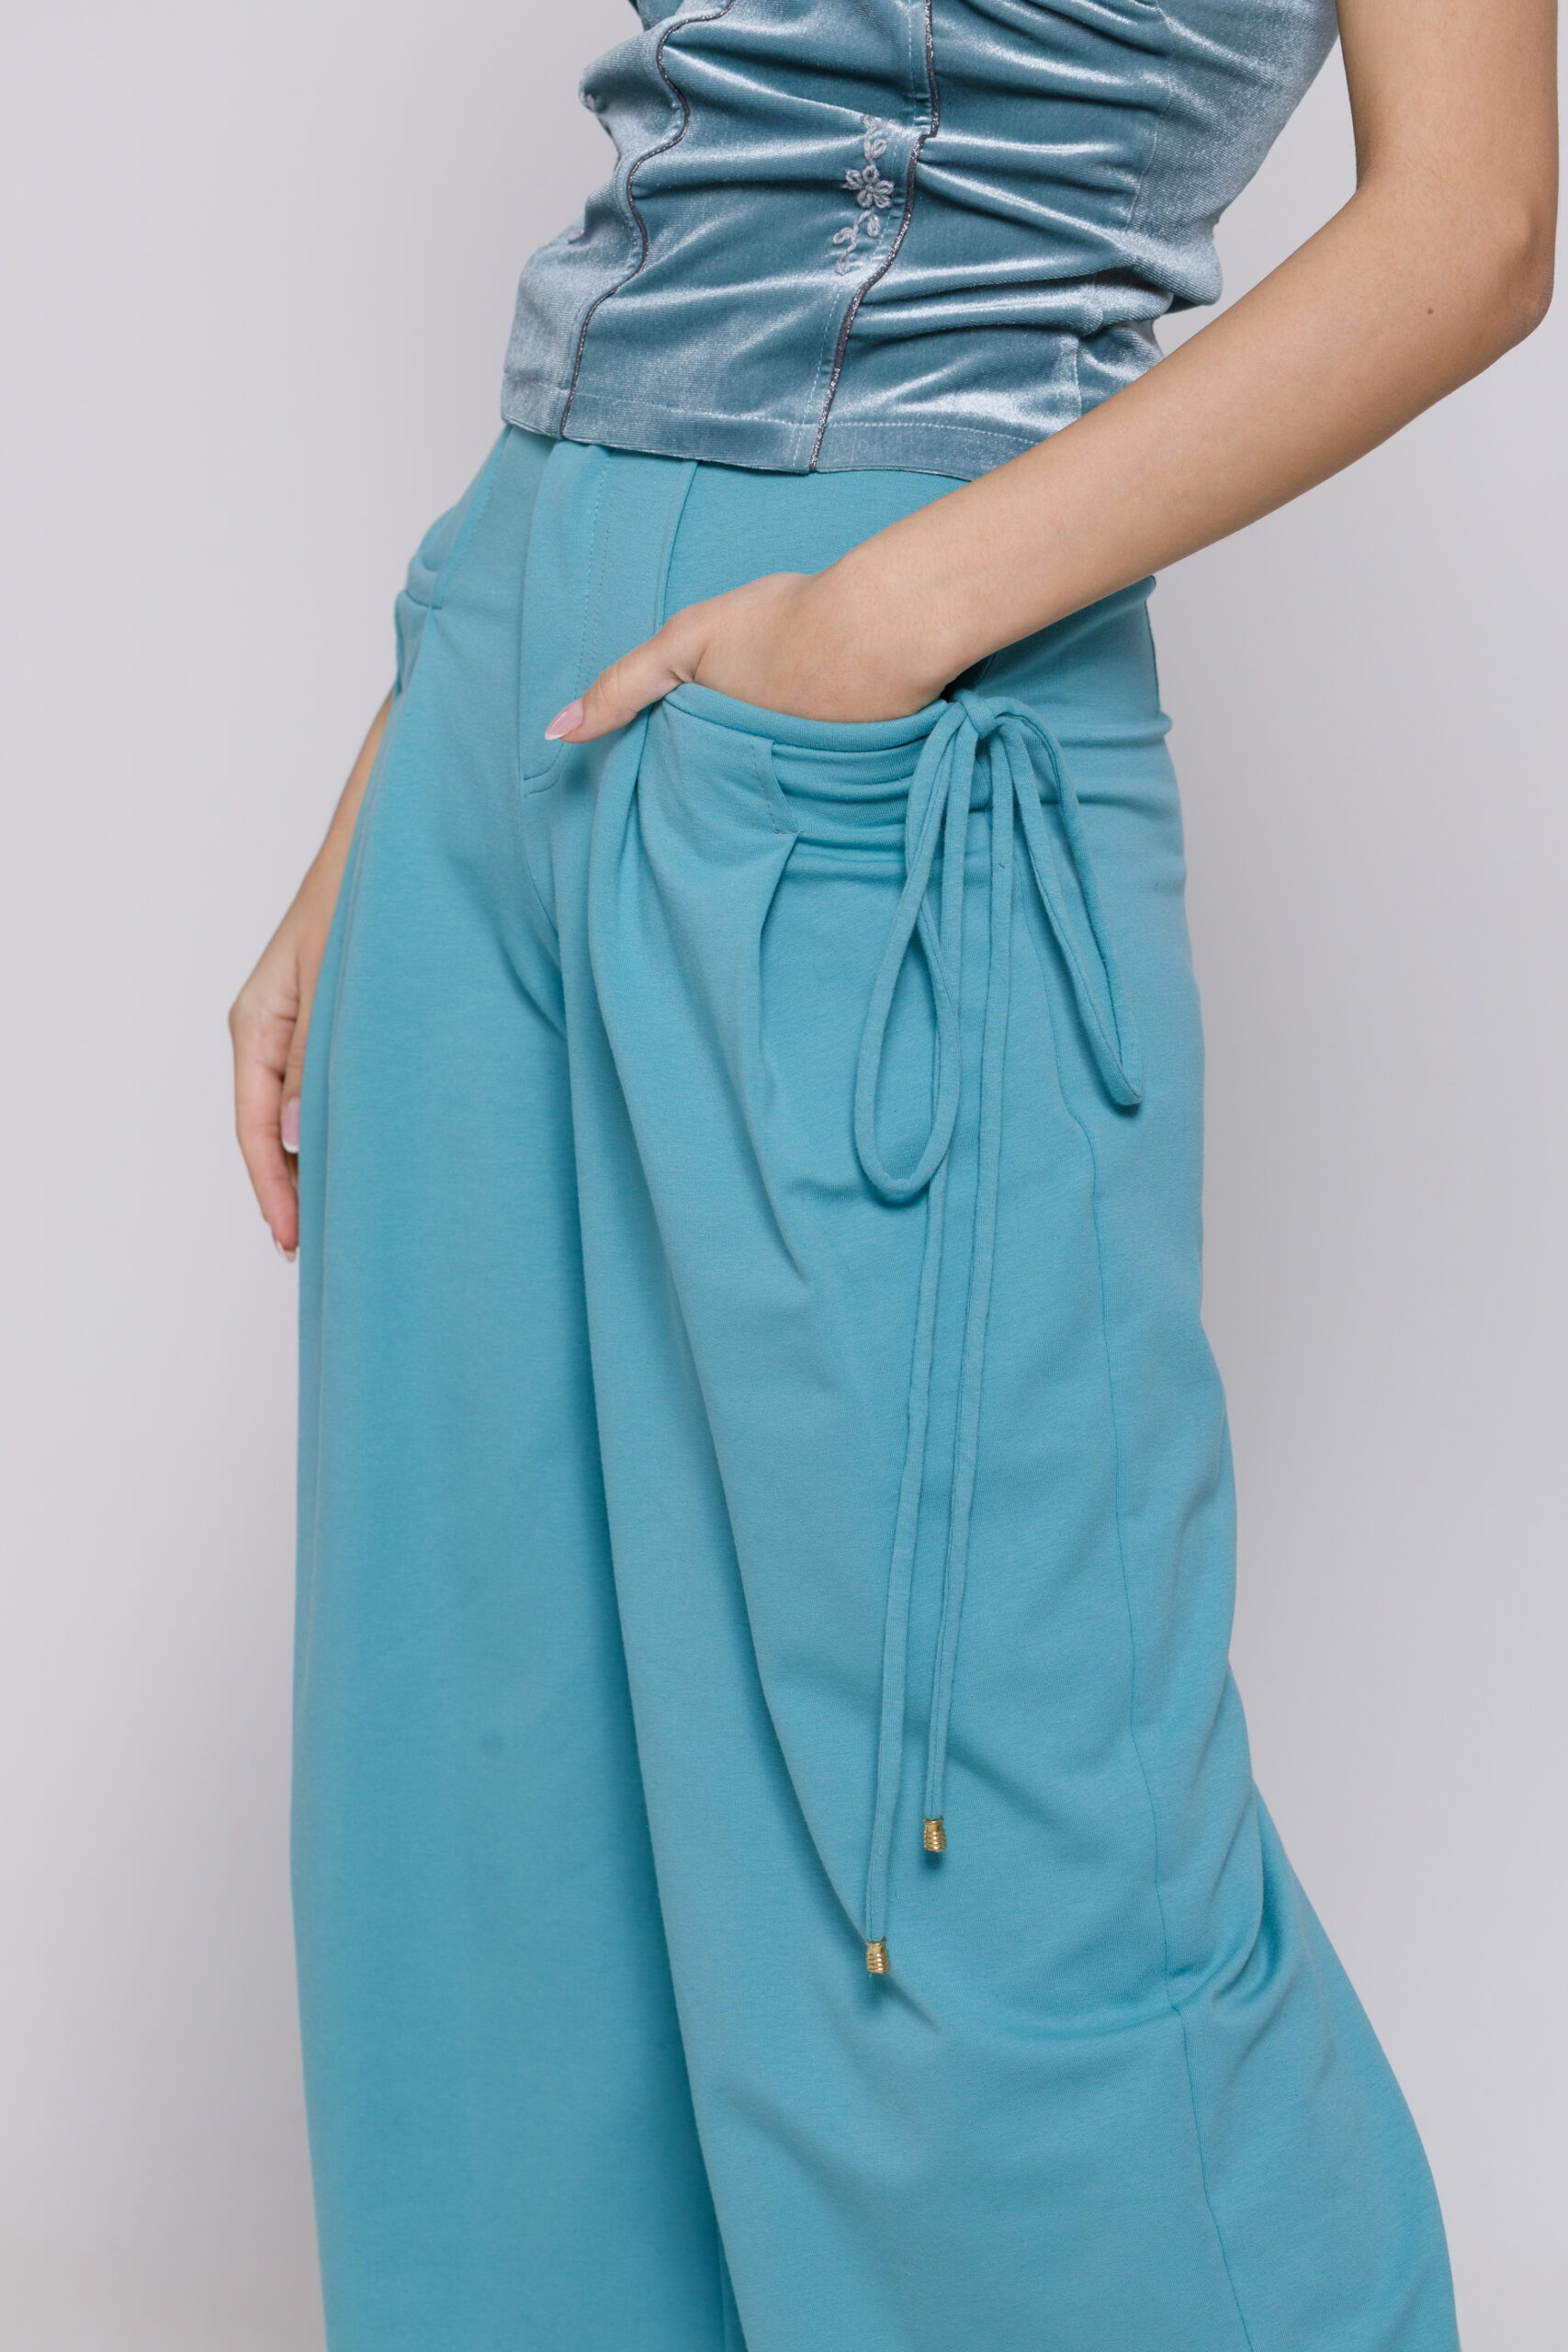 Pantalon BONNIE  turcoaz. Materiale naturale, design unicat, cu broderie si aplicatii handmade